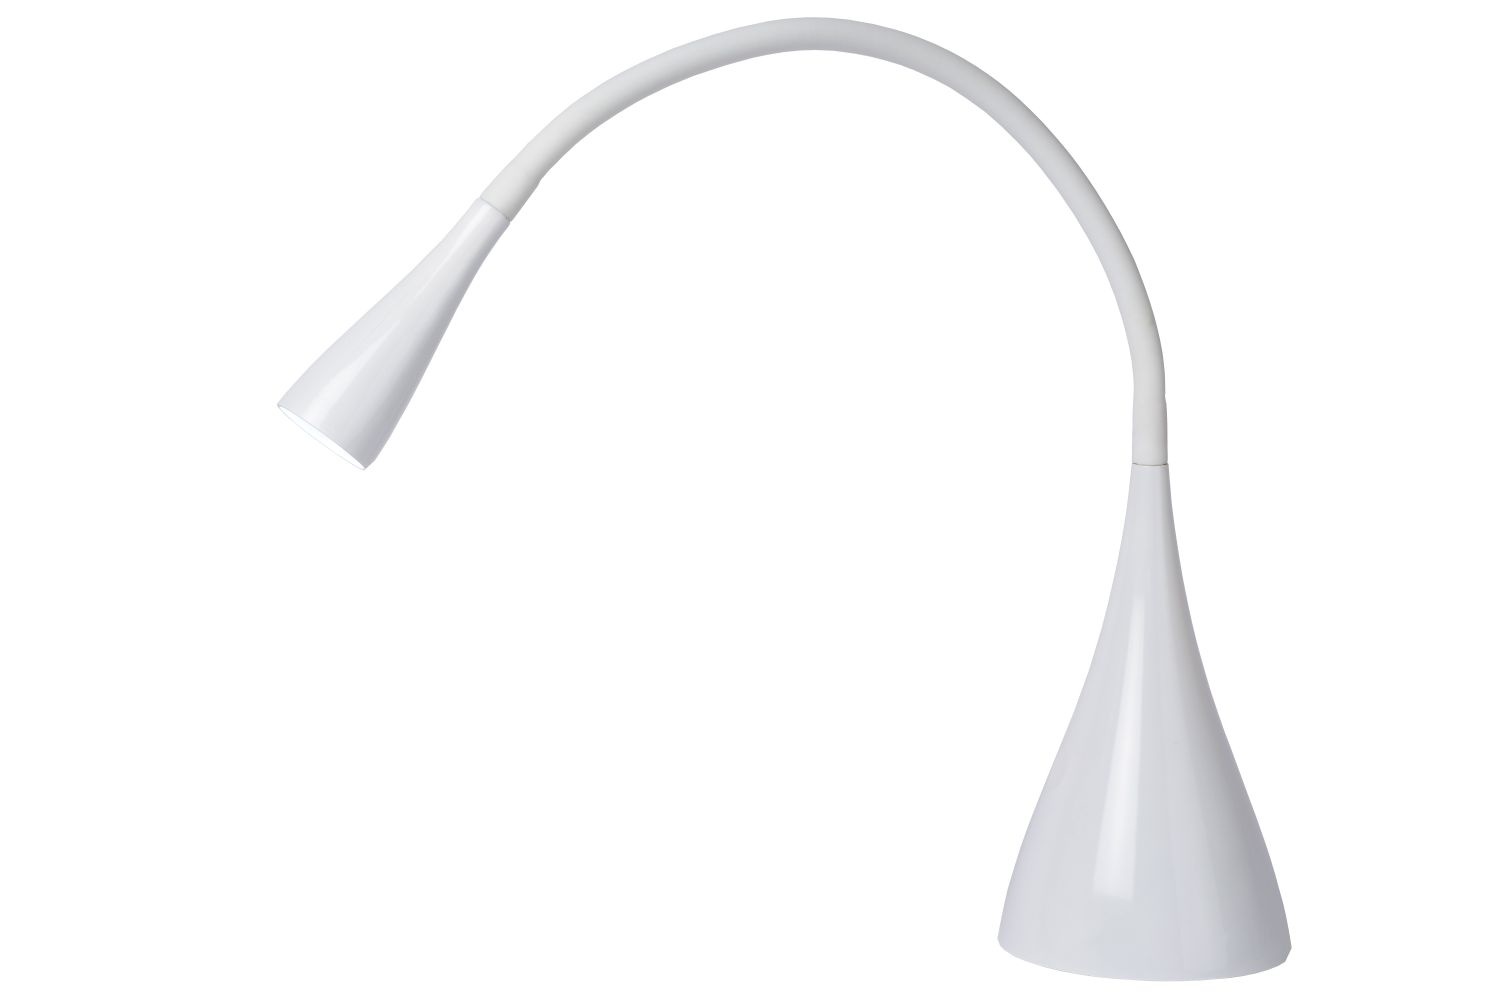 Lampe de bureau flexible USB Whiteswan